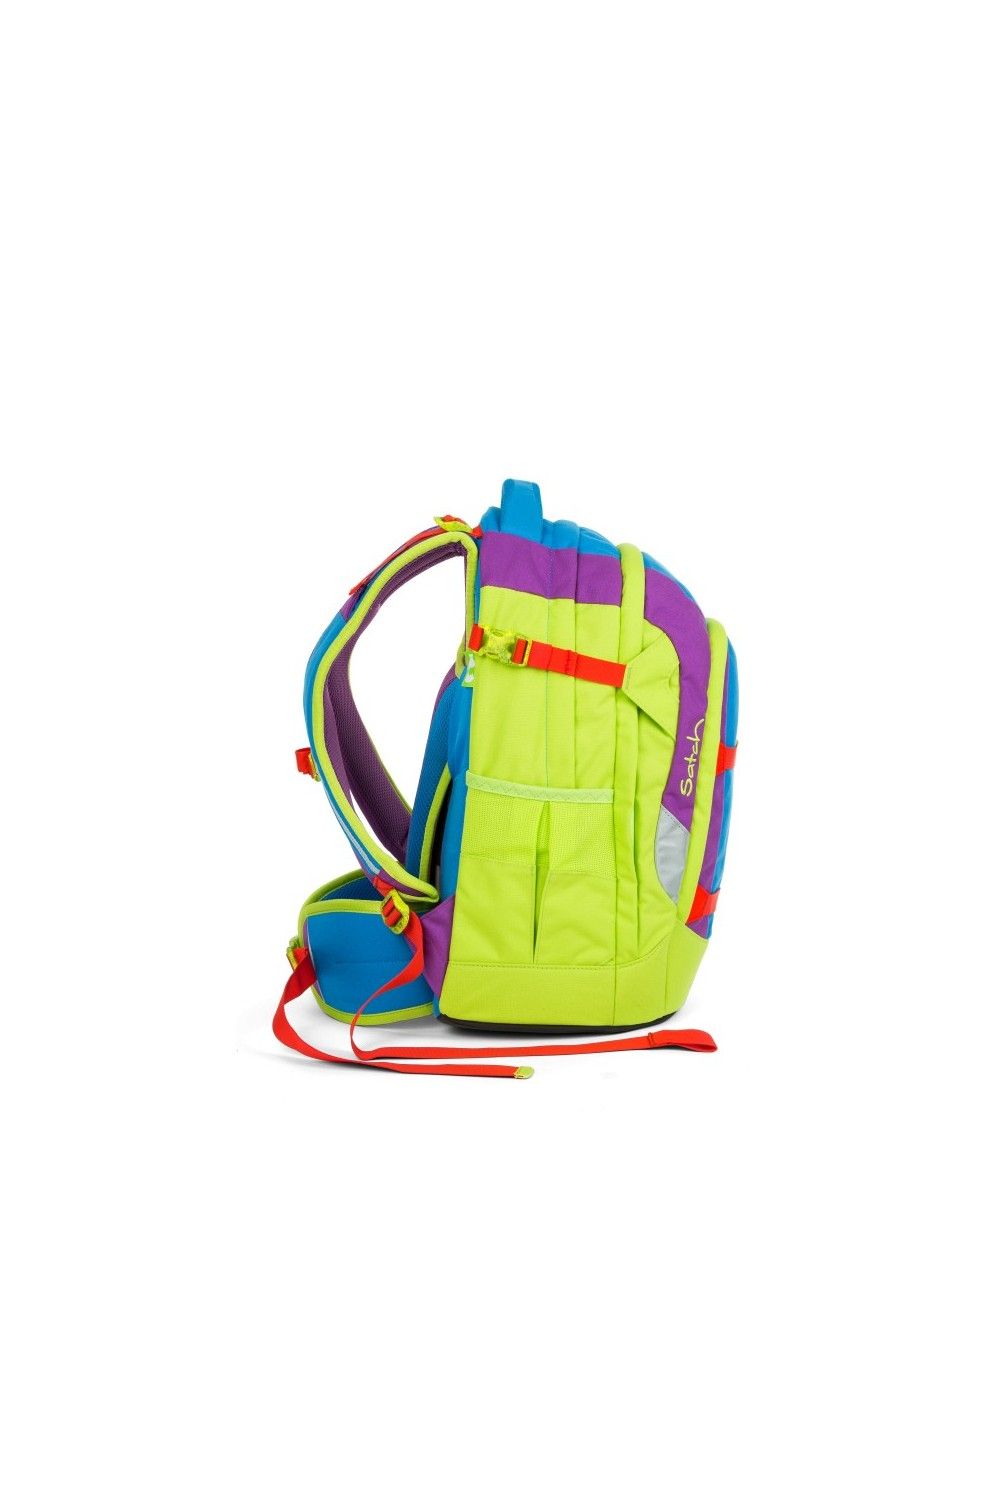 Satch school backpack Flash Jumper